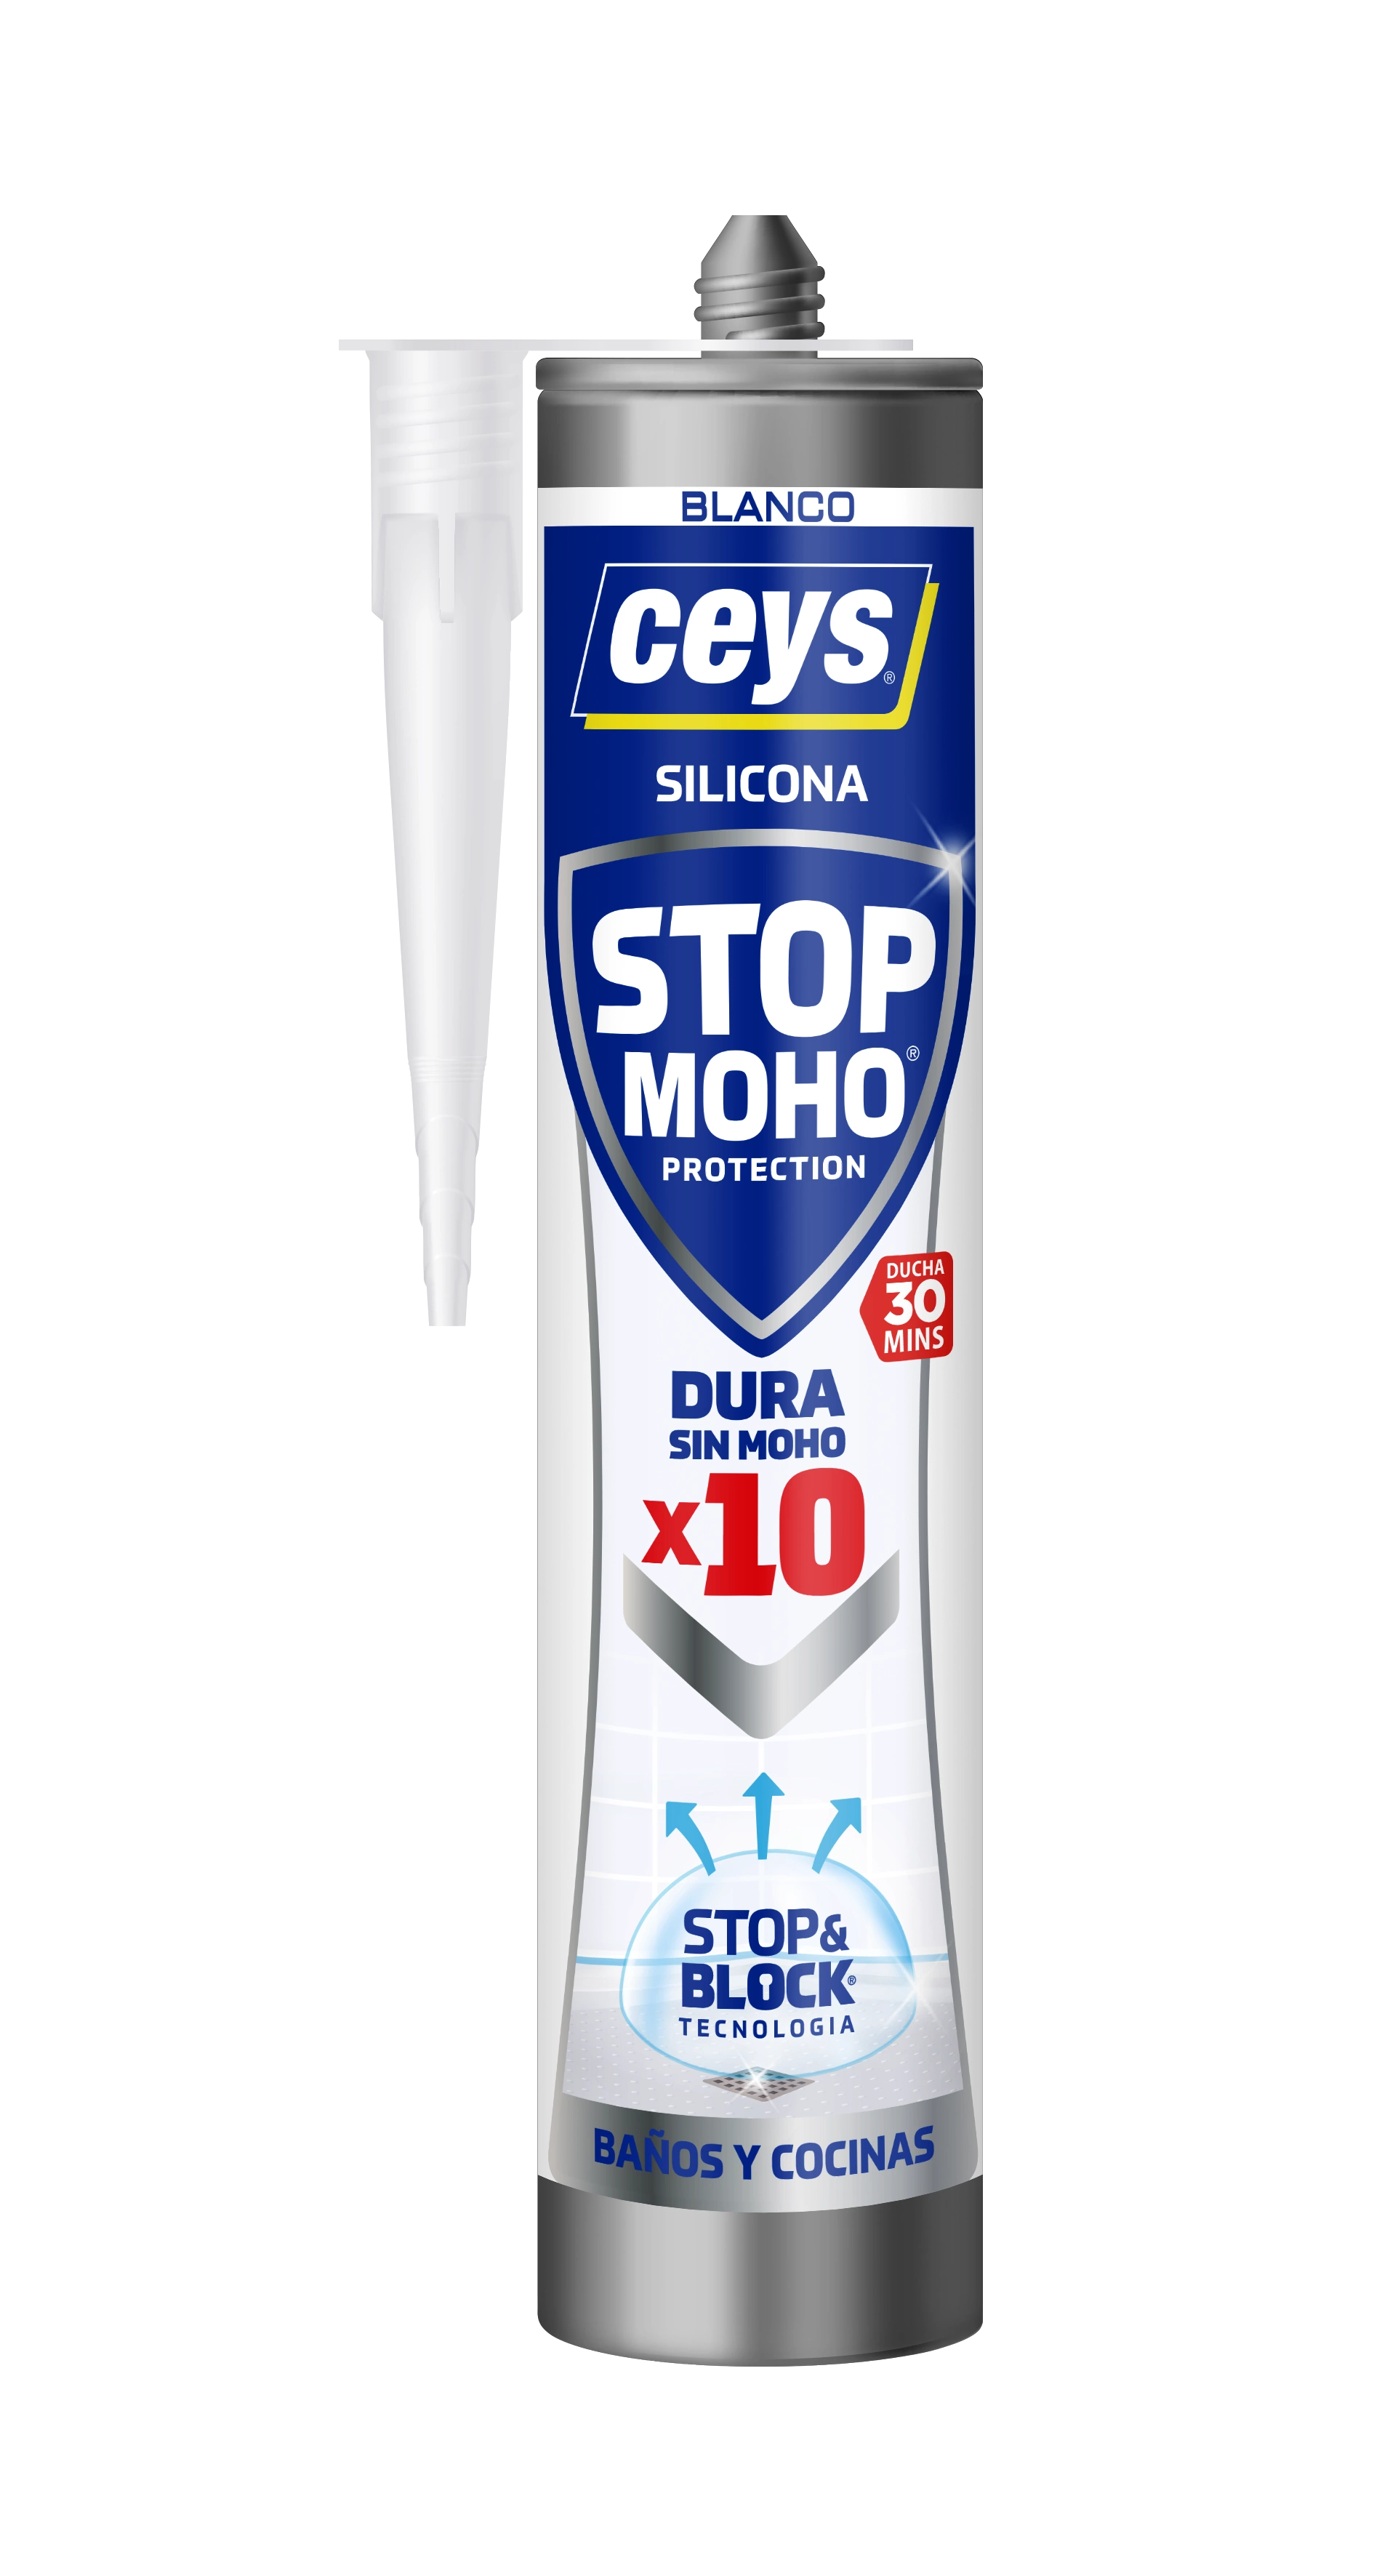 Silicona STOP MOHO Protection - Ceys